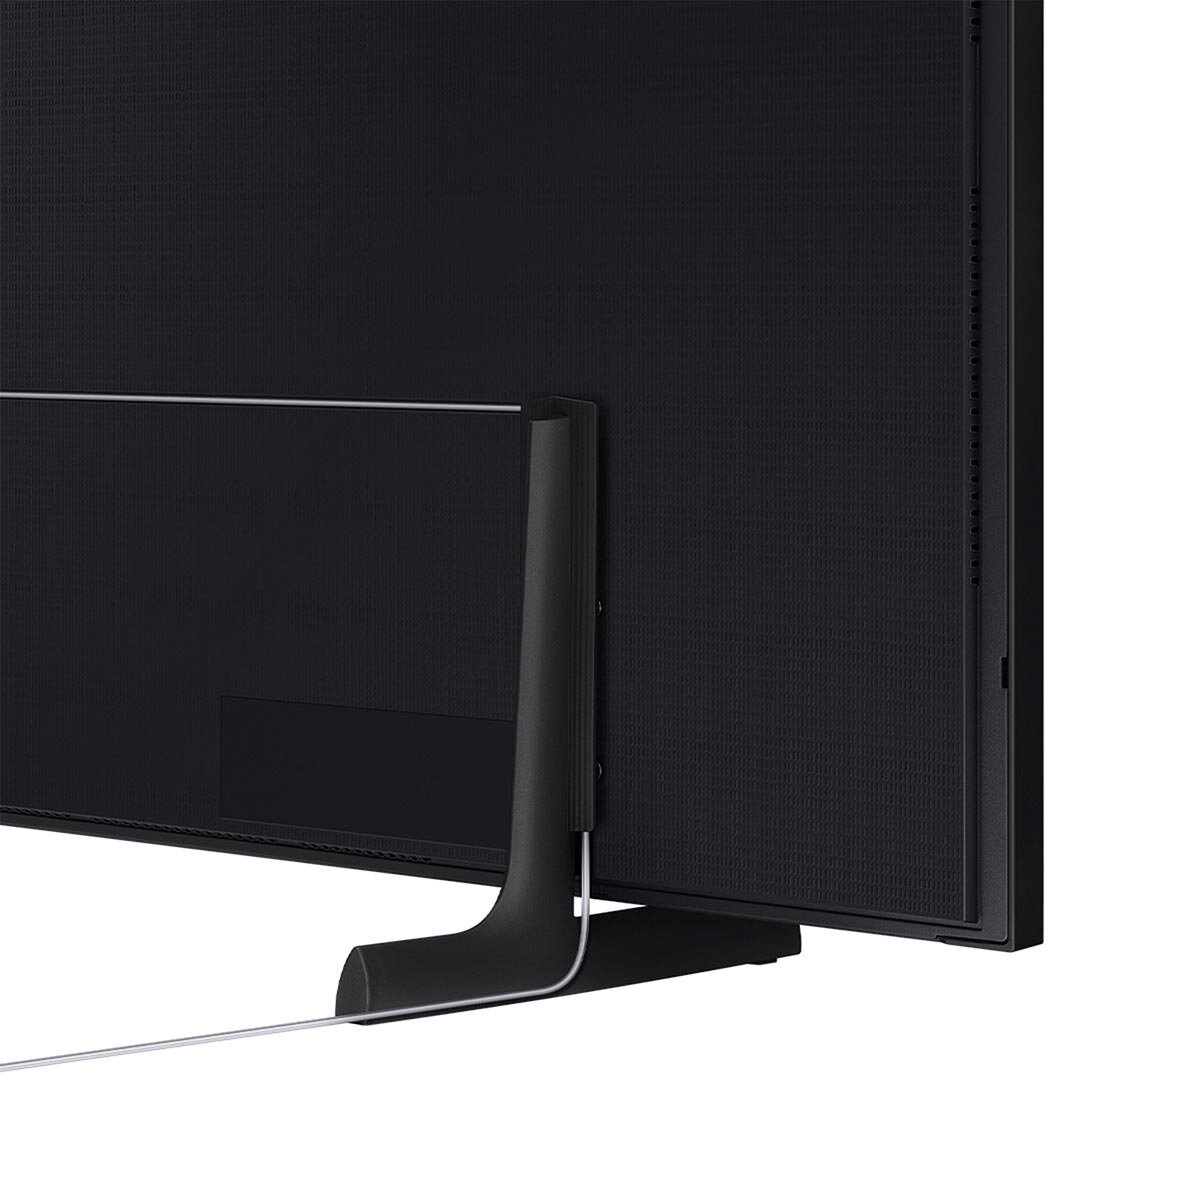 Samsung Pantalla 55" QLED The Frame 4K Smart TV + Marco blanco